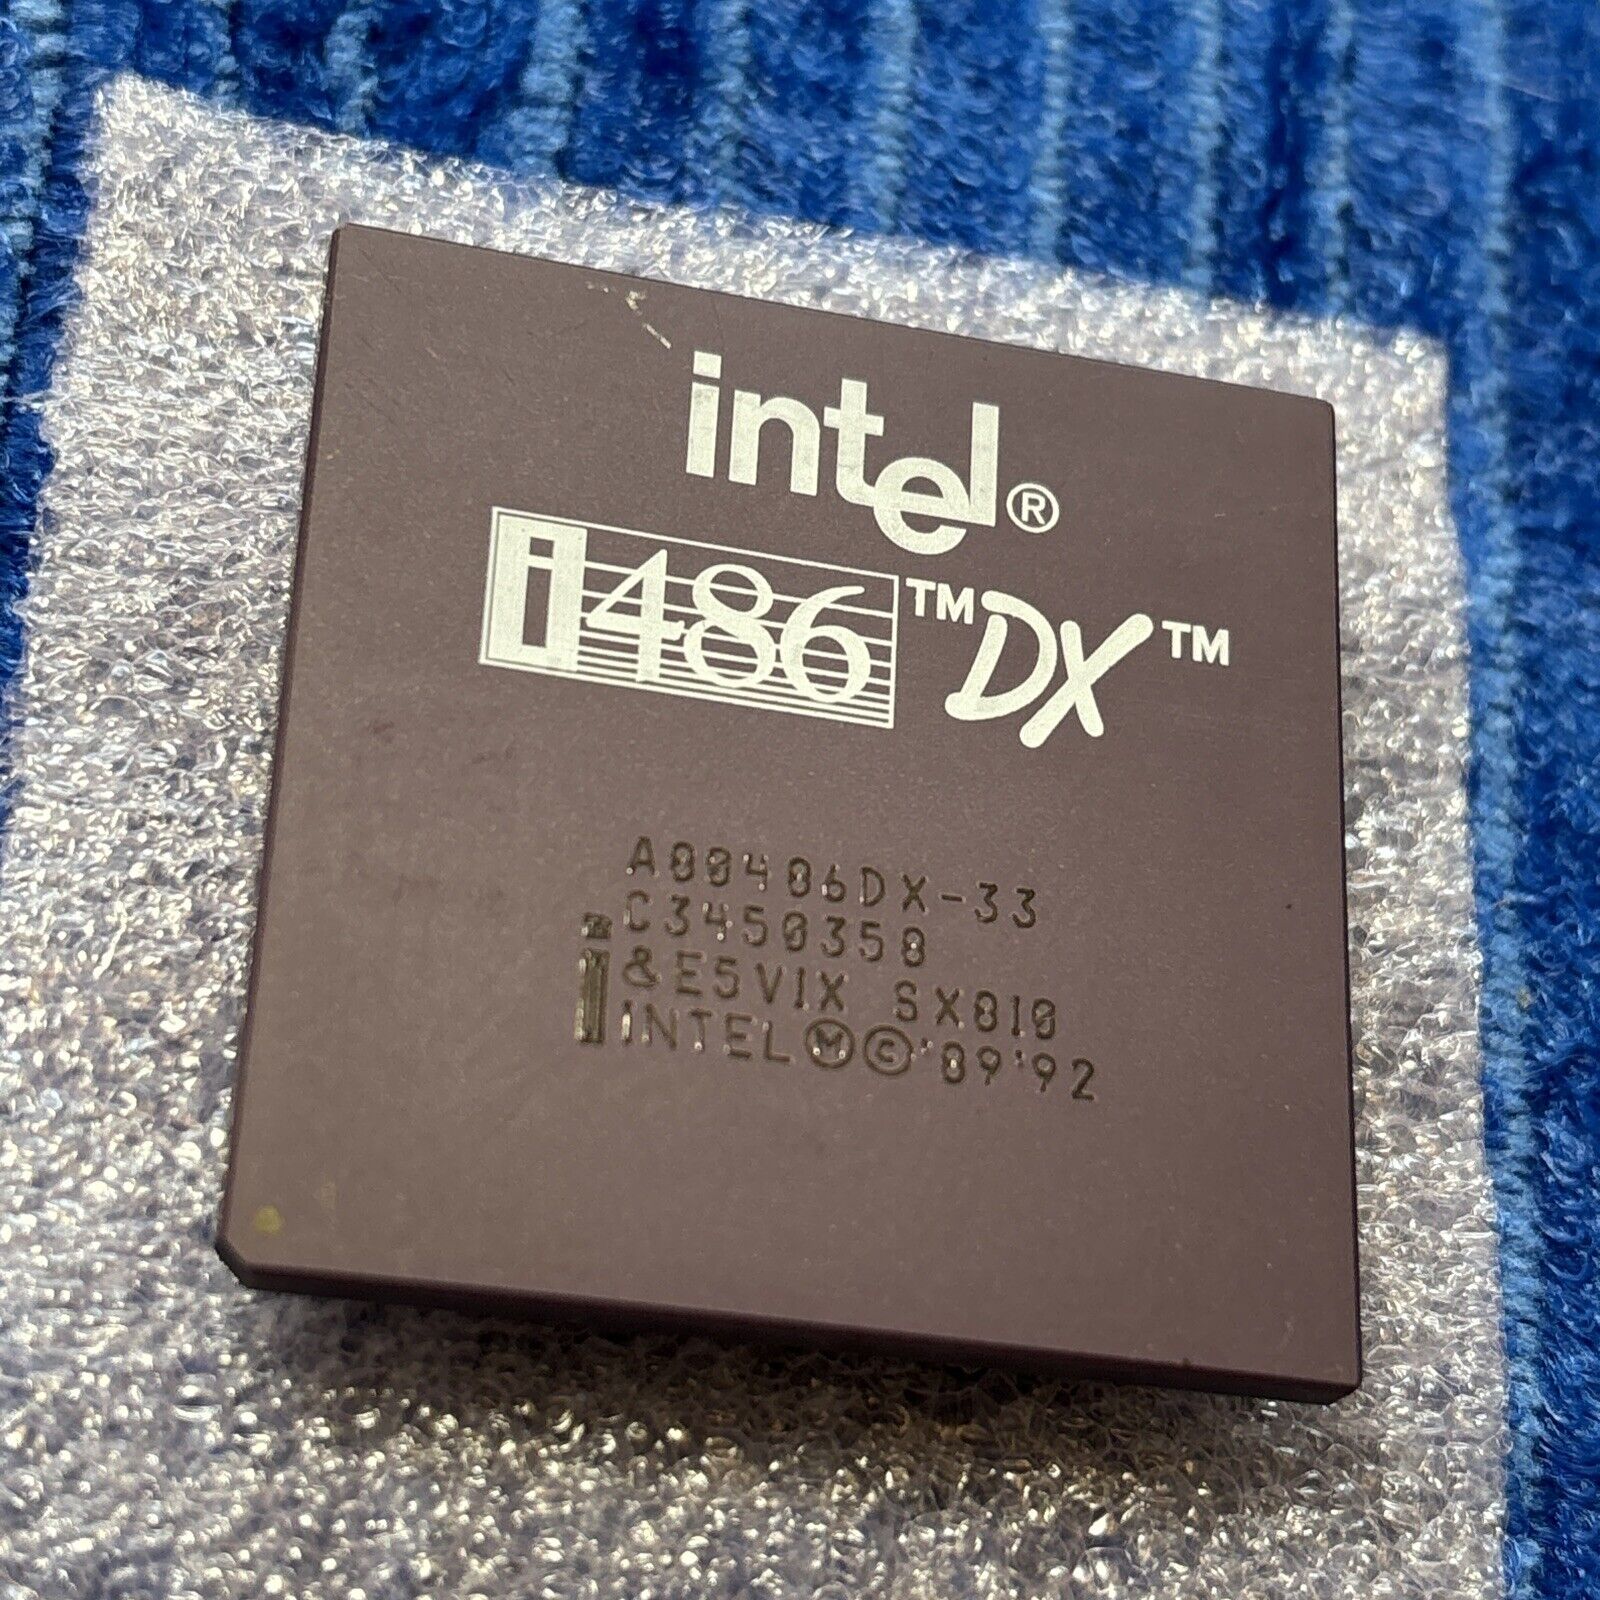 Intel A80486DX-33 SX810 i486 DX CPU 486 Processor Working Pull  (G)